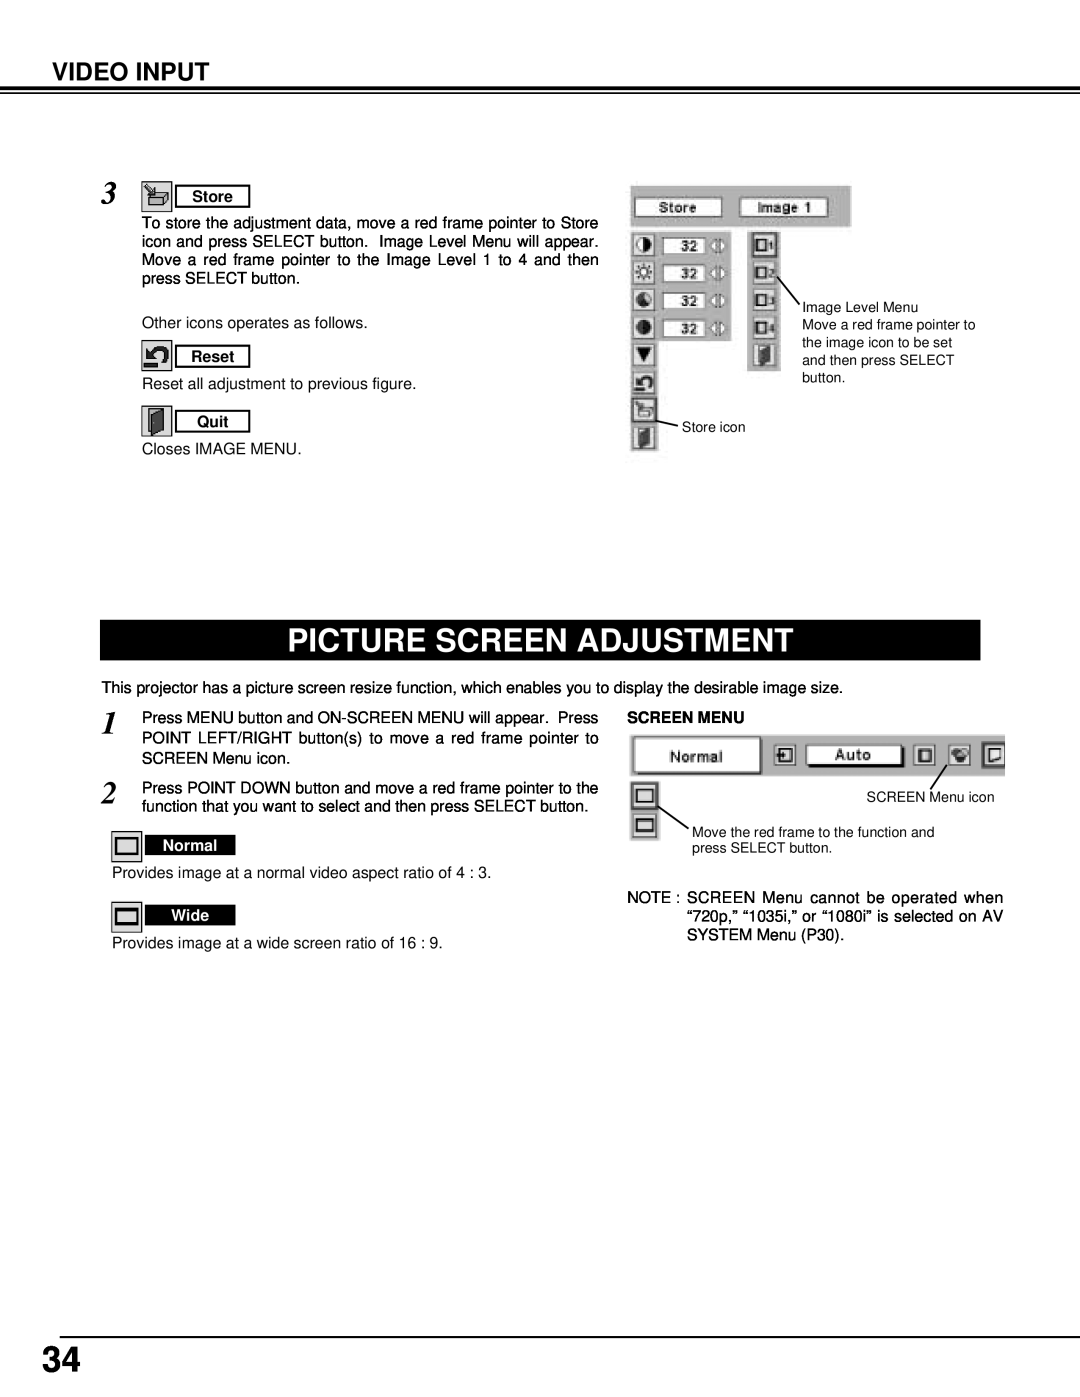 BOXLIGHT cp-12t manual Picture Screen Adjustment, Video Input, Store, Reset, Quit, Screen Menu 